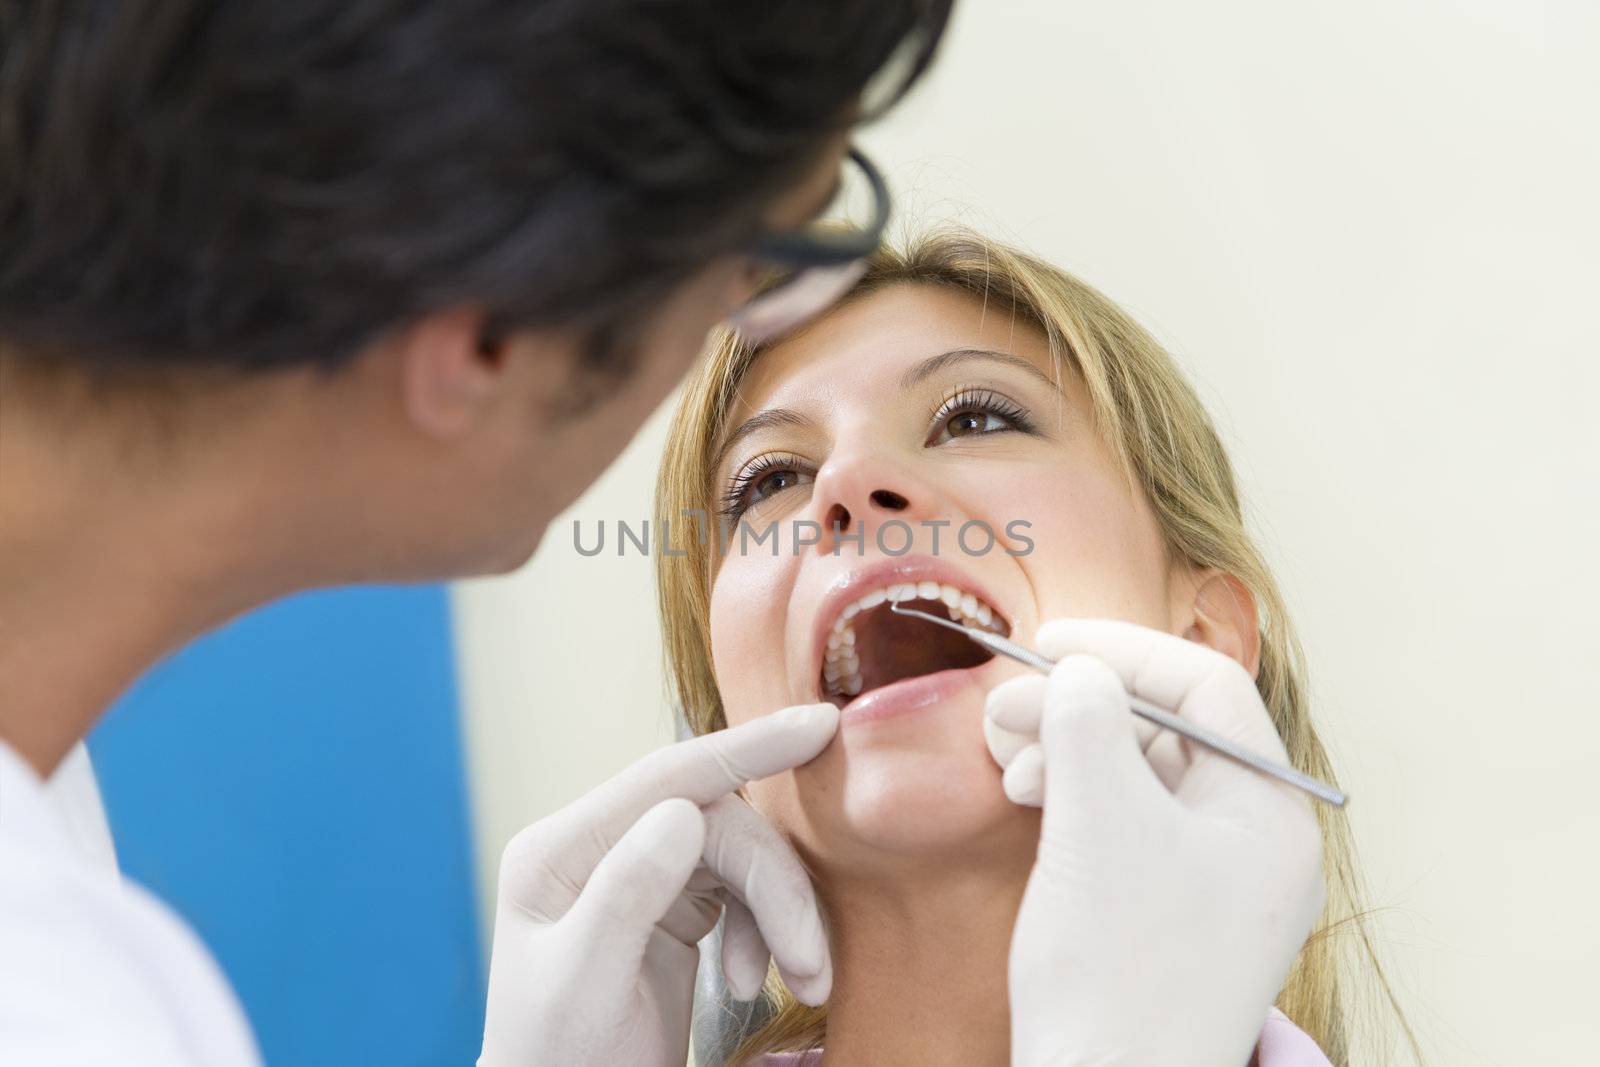 dentist by diego_cervo